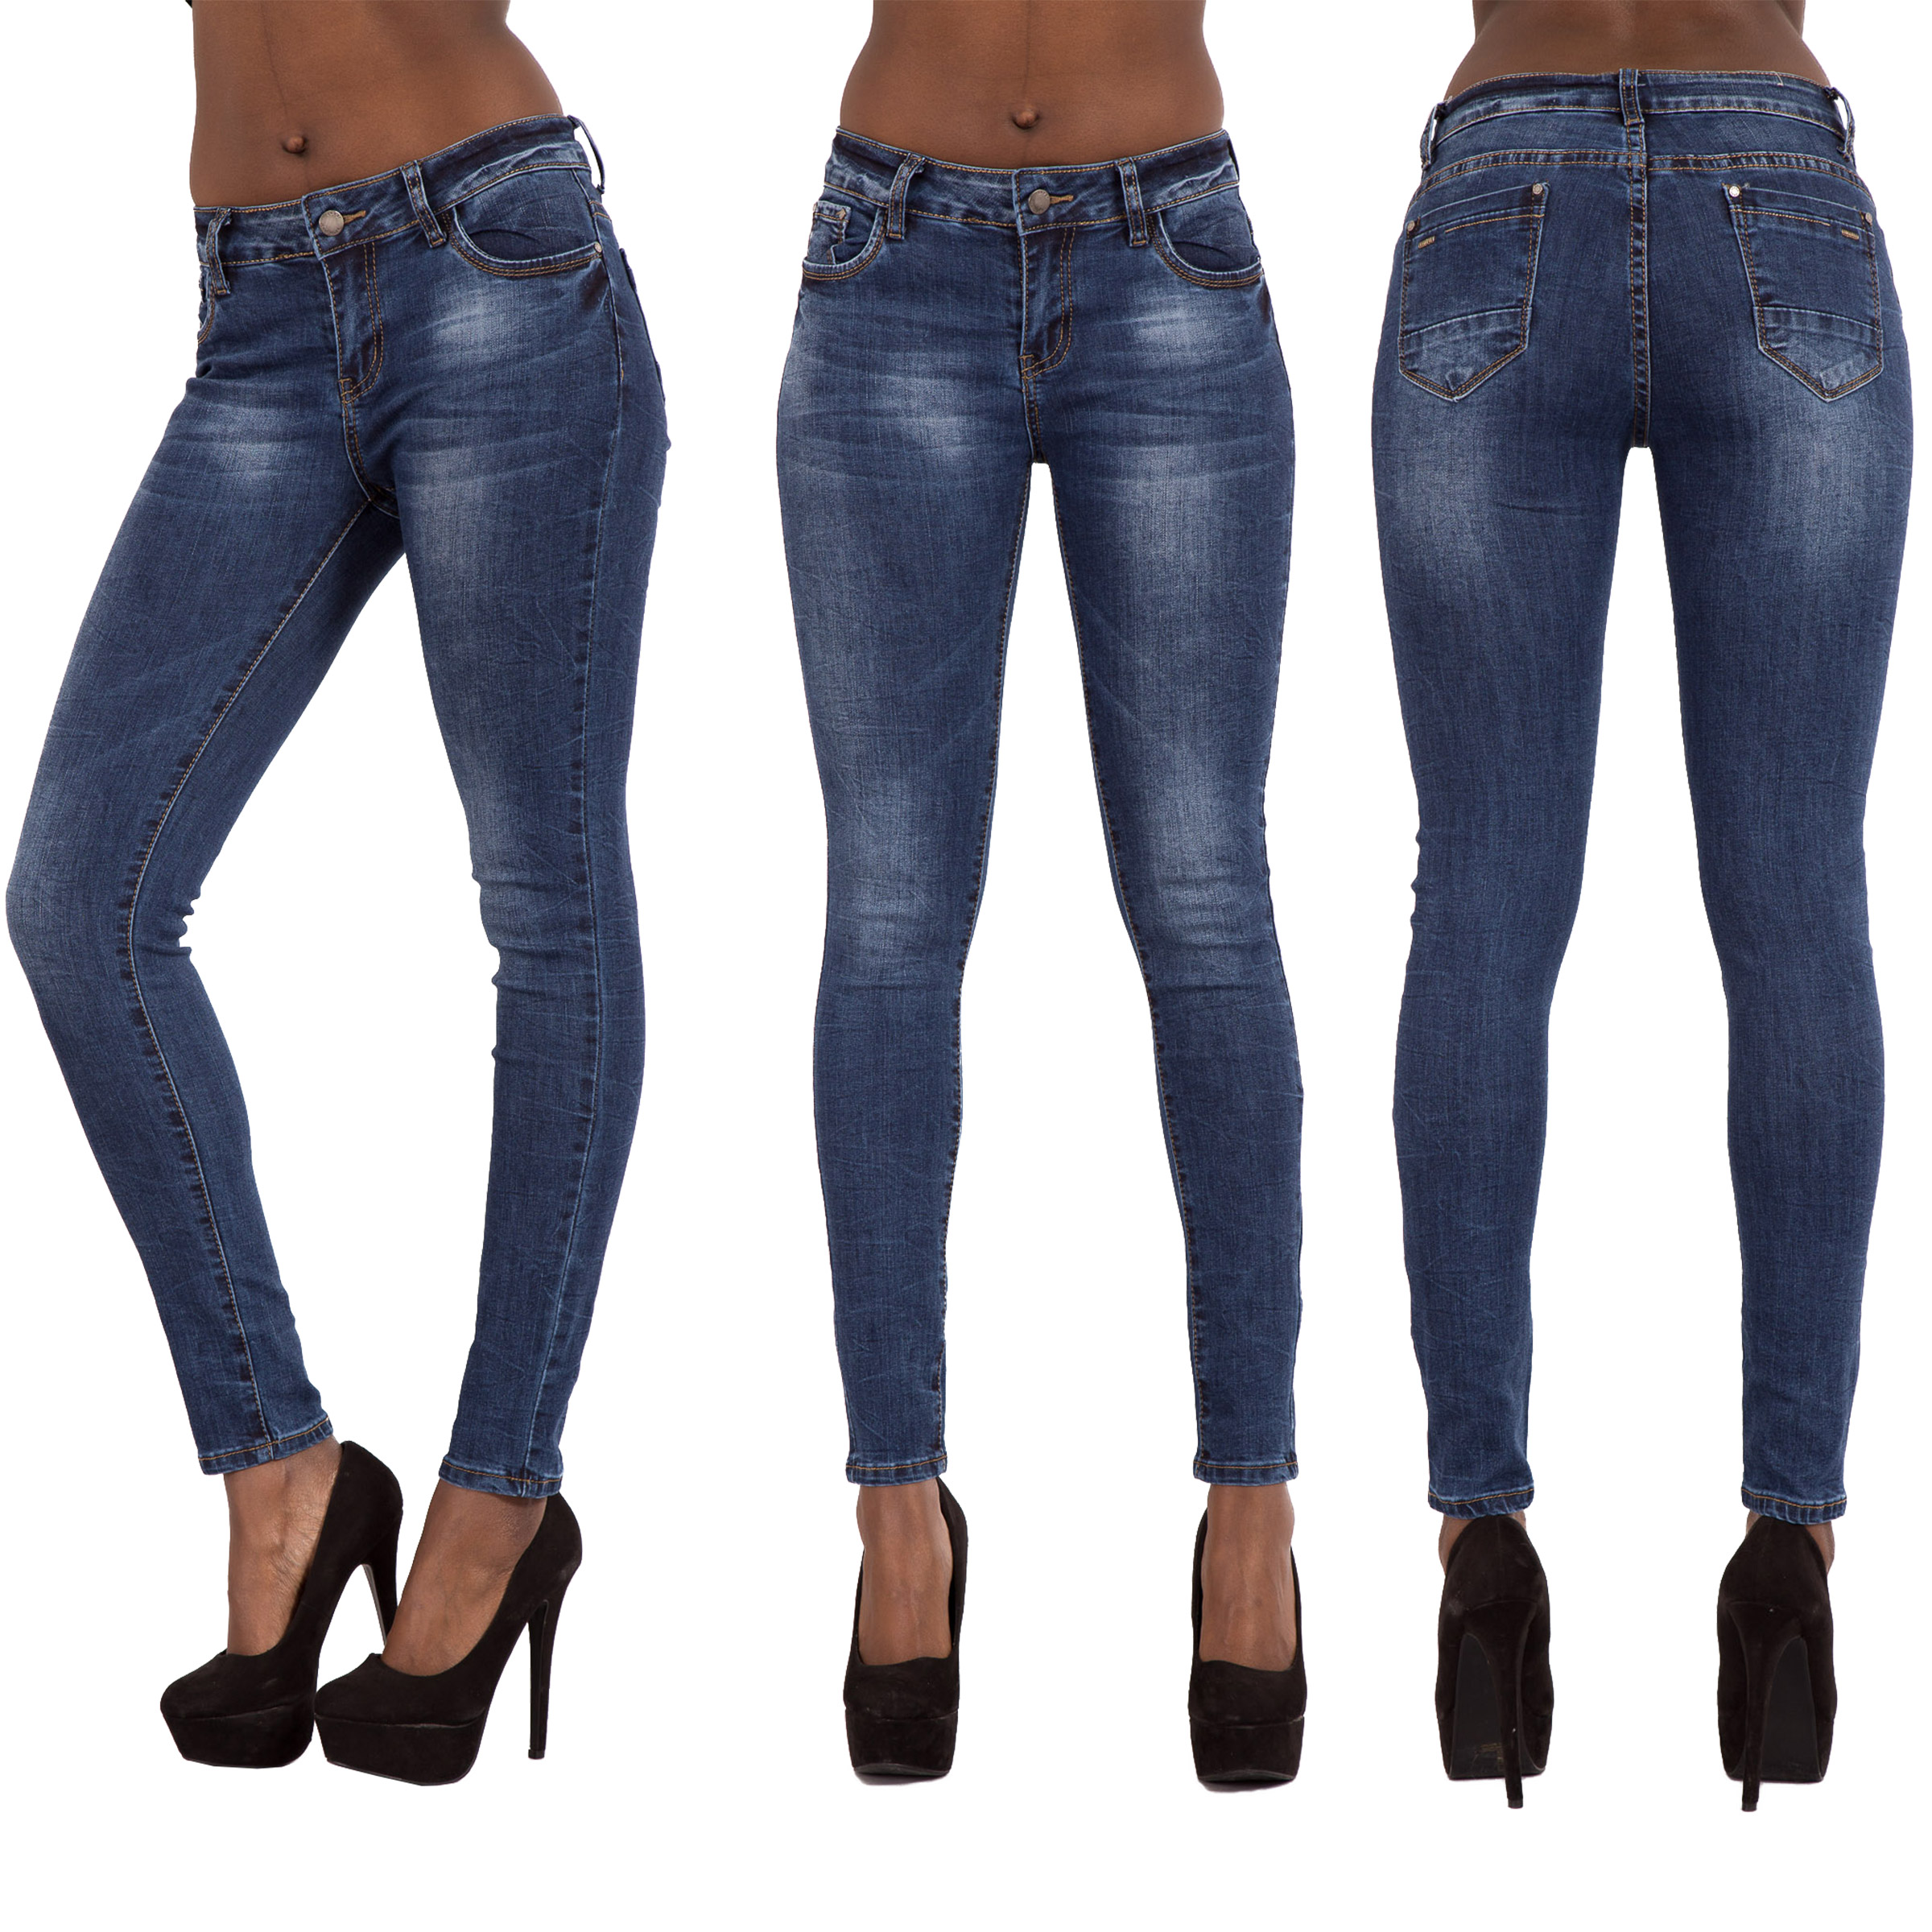 WOMEN'S Sexy Blue Skinny Leg Jeans Faded Denim Low Waist jeans Size 8 ...